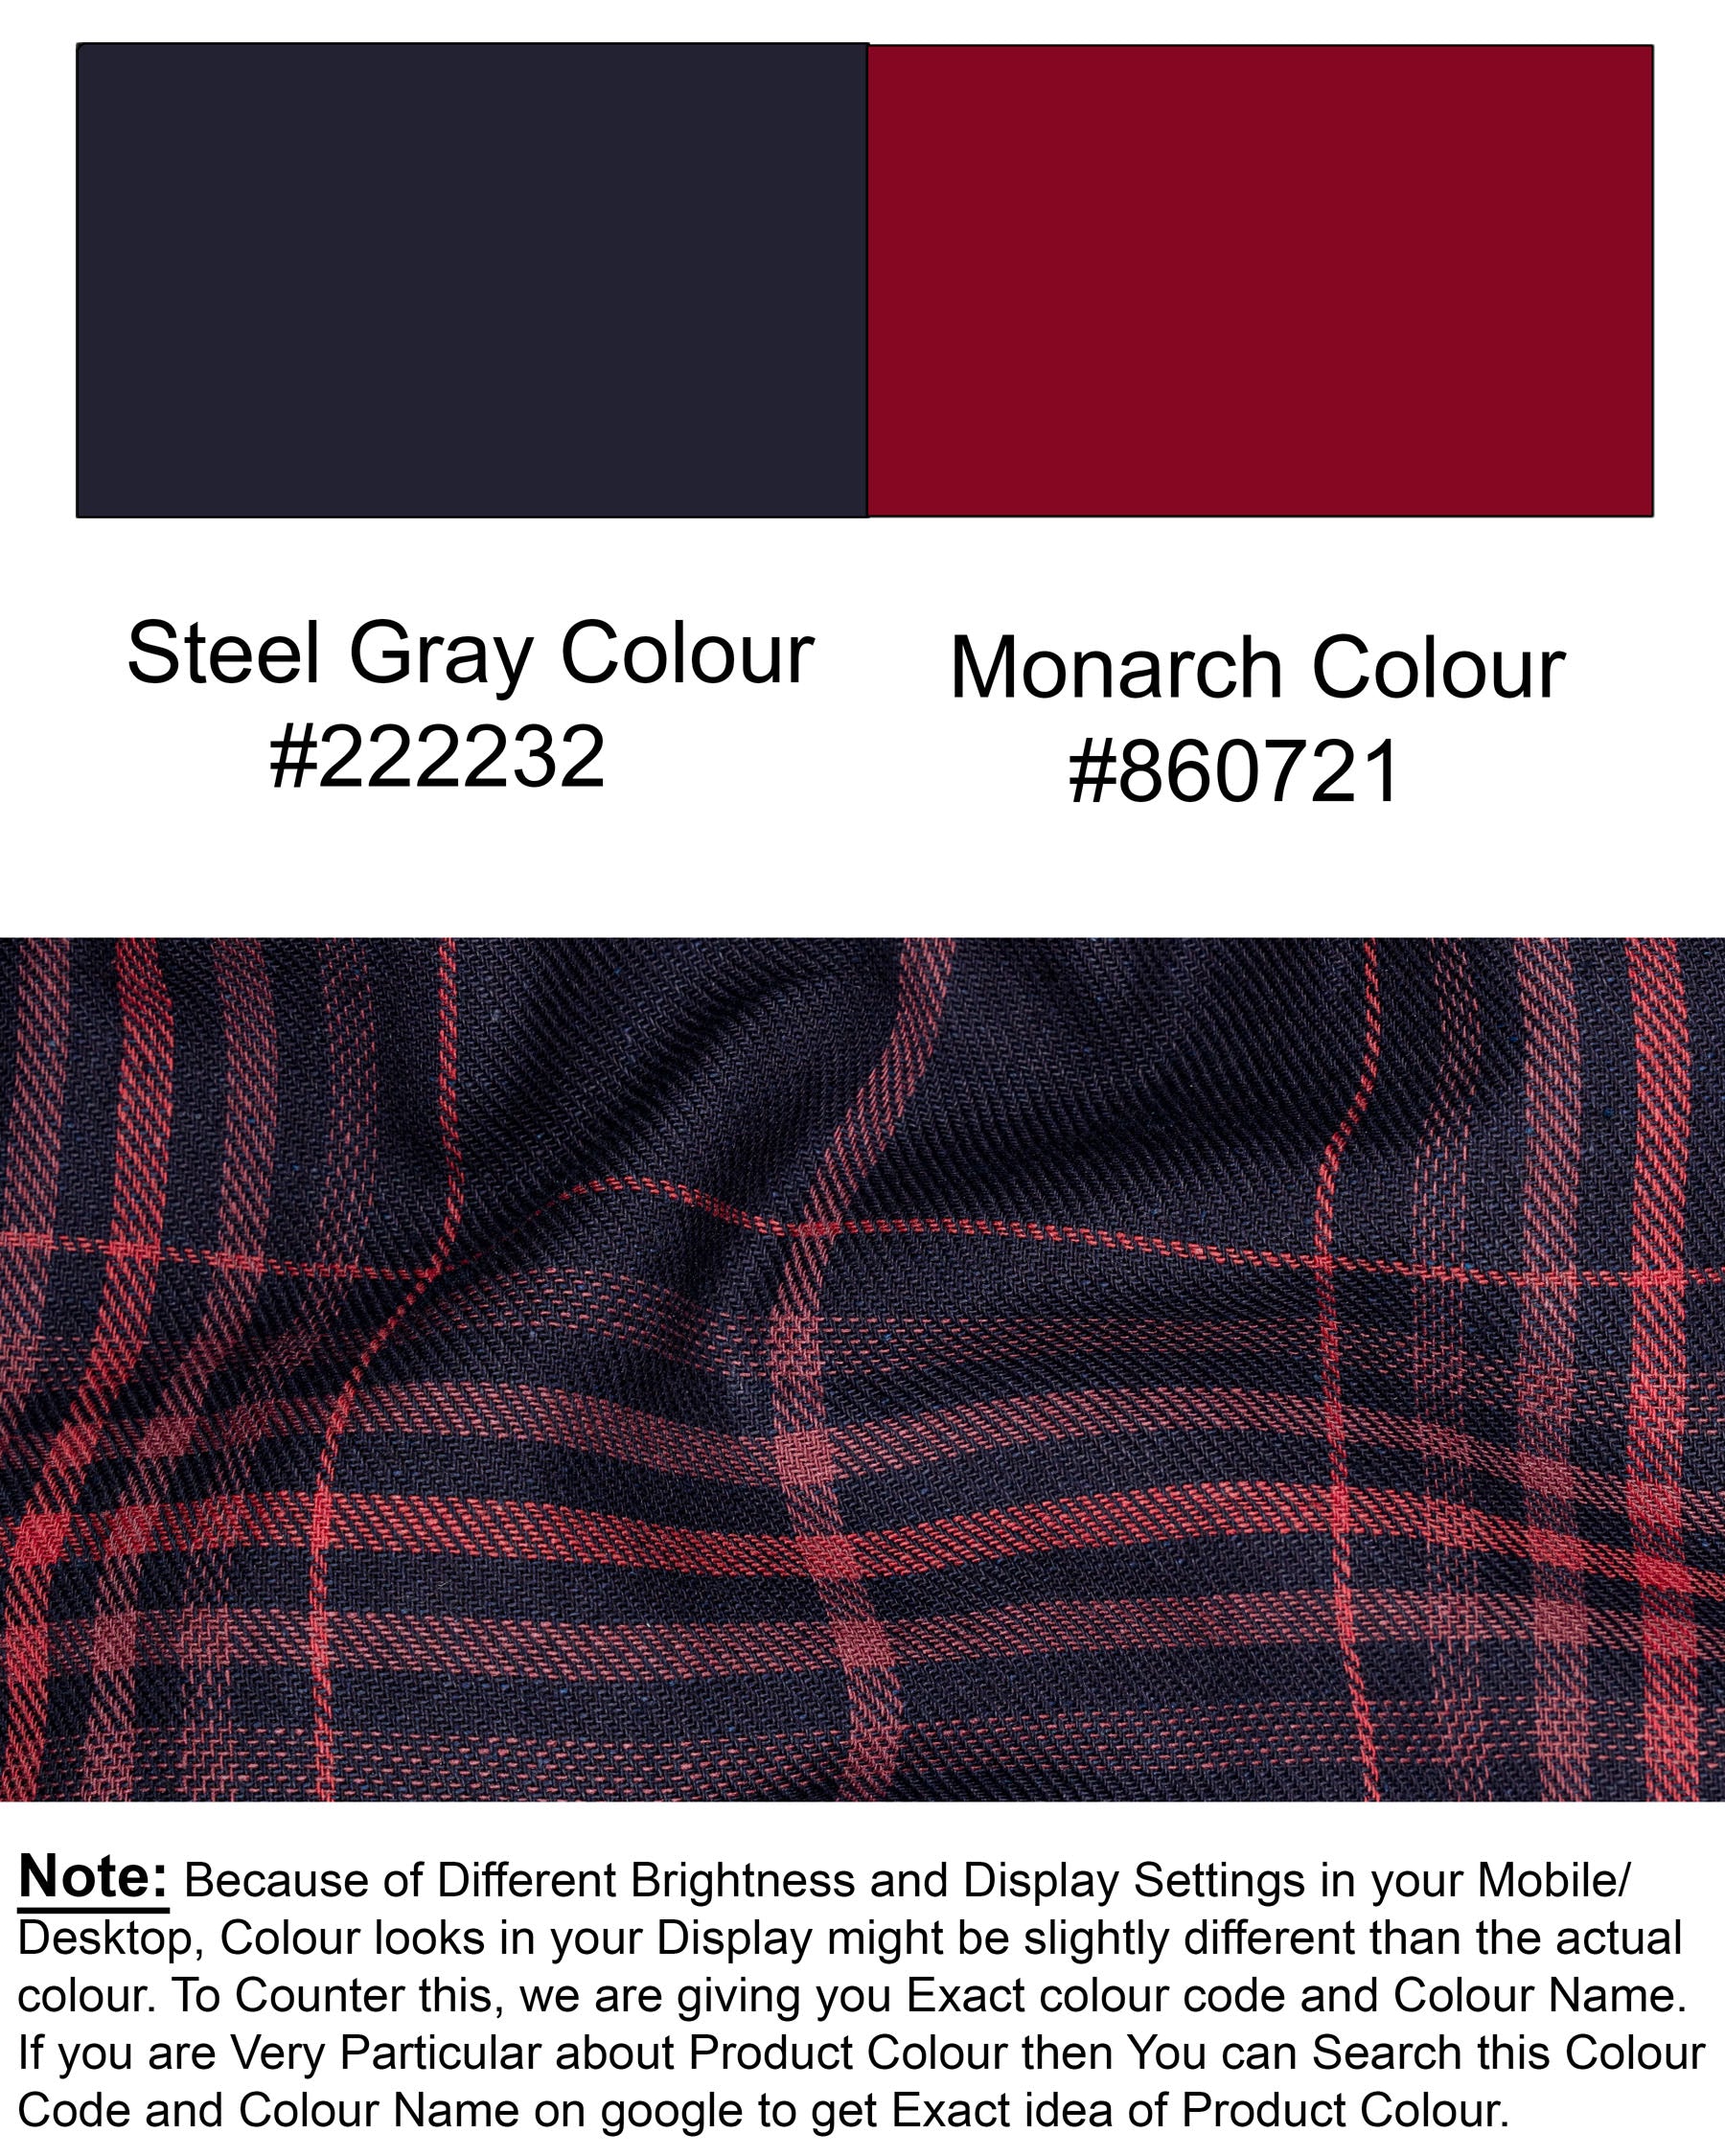 Steel Gray and Monarch Red Plaid Twill Textured Premium Cotton Shirt 6704-BD-38, 6704-BD-H-38, 6704-BD-39, 6704-BD-H-39, 6704-BD-40, 6704-BD-H-40, 6704-BD-42, 6704-BD-H-42, 6704-BD-44, 6704-BD-H-44, 6704-BD-46, 6704-BD-H-46, 6704-BD-48, 6704-BD-H-48, 6704-BD-50, 6704-BD-H-50, 6704-BD-52, 6704-BD-H-52